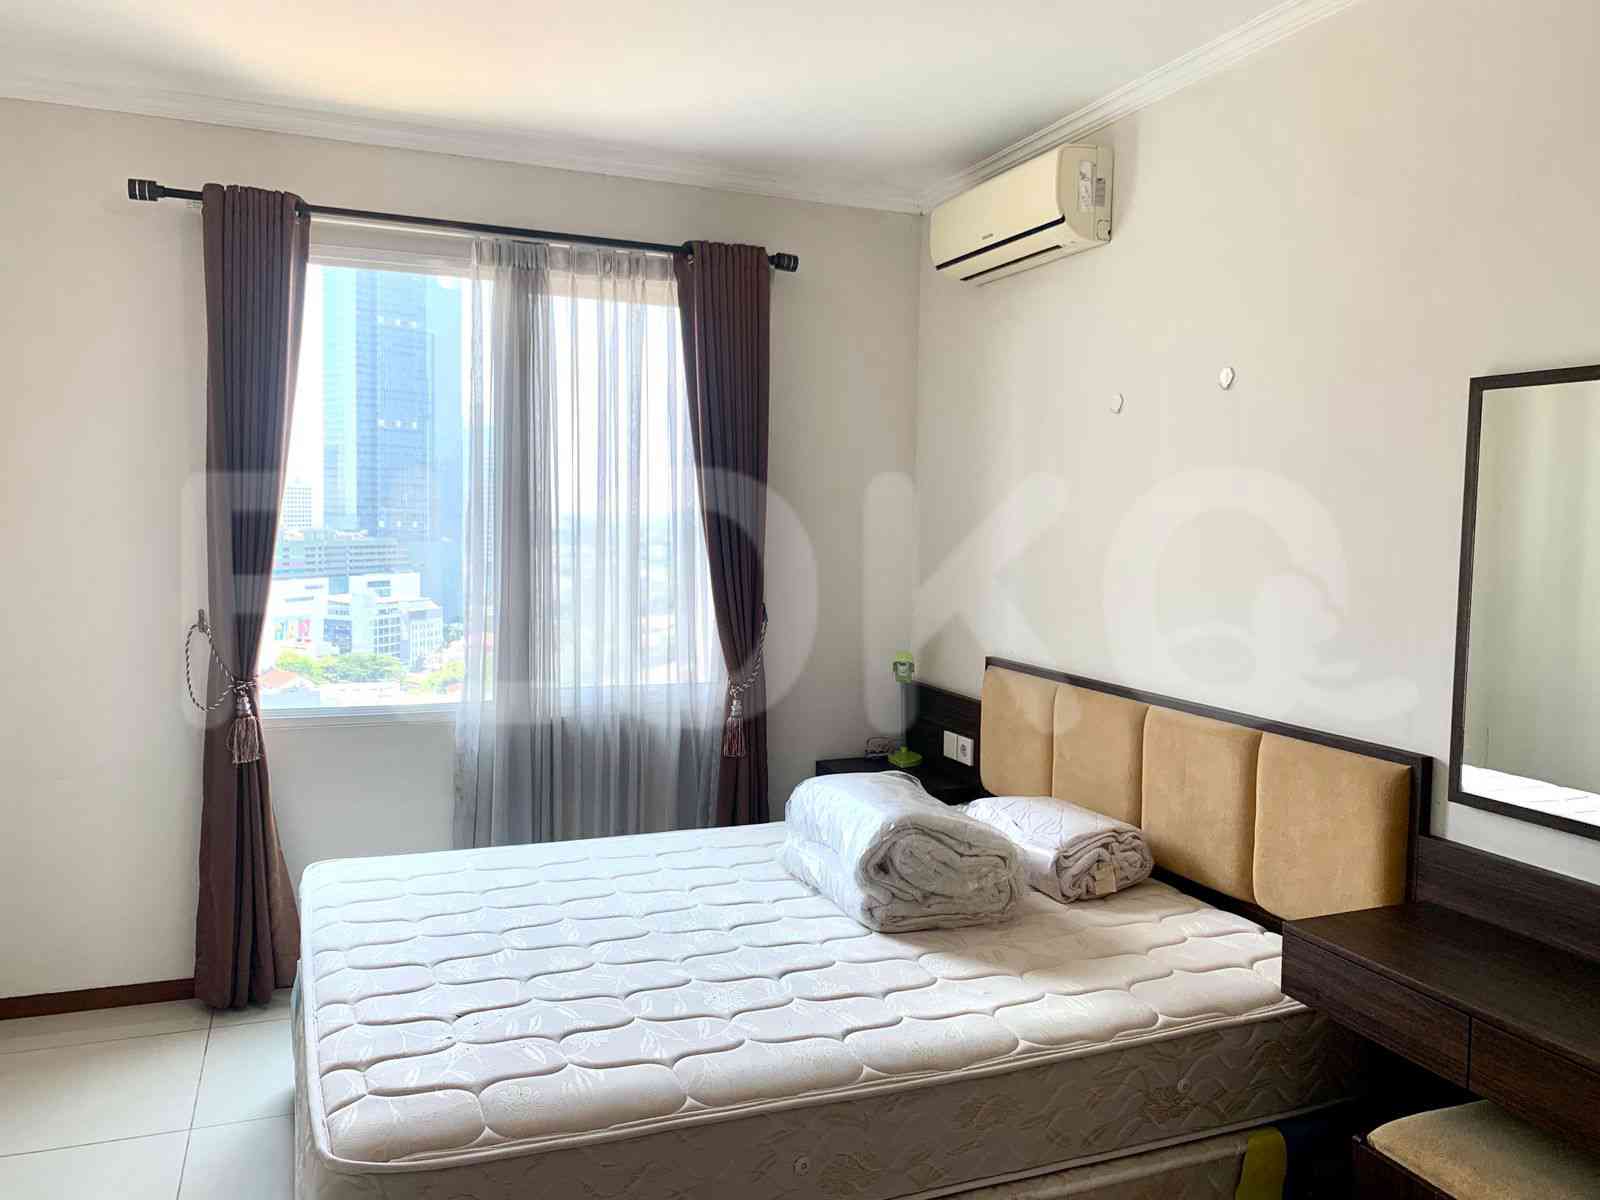 Tipe 1 Kamar Tidur di Lantai 15 untuk disewakan di Thamrin Executive Residence - fth150 2